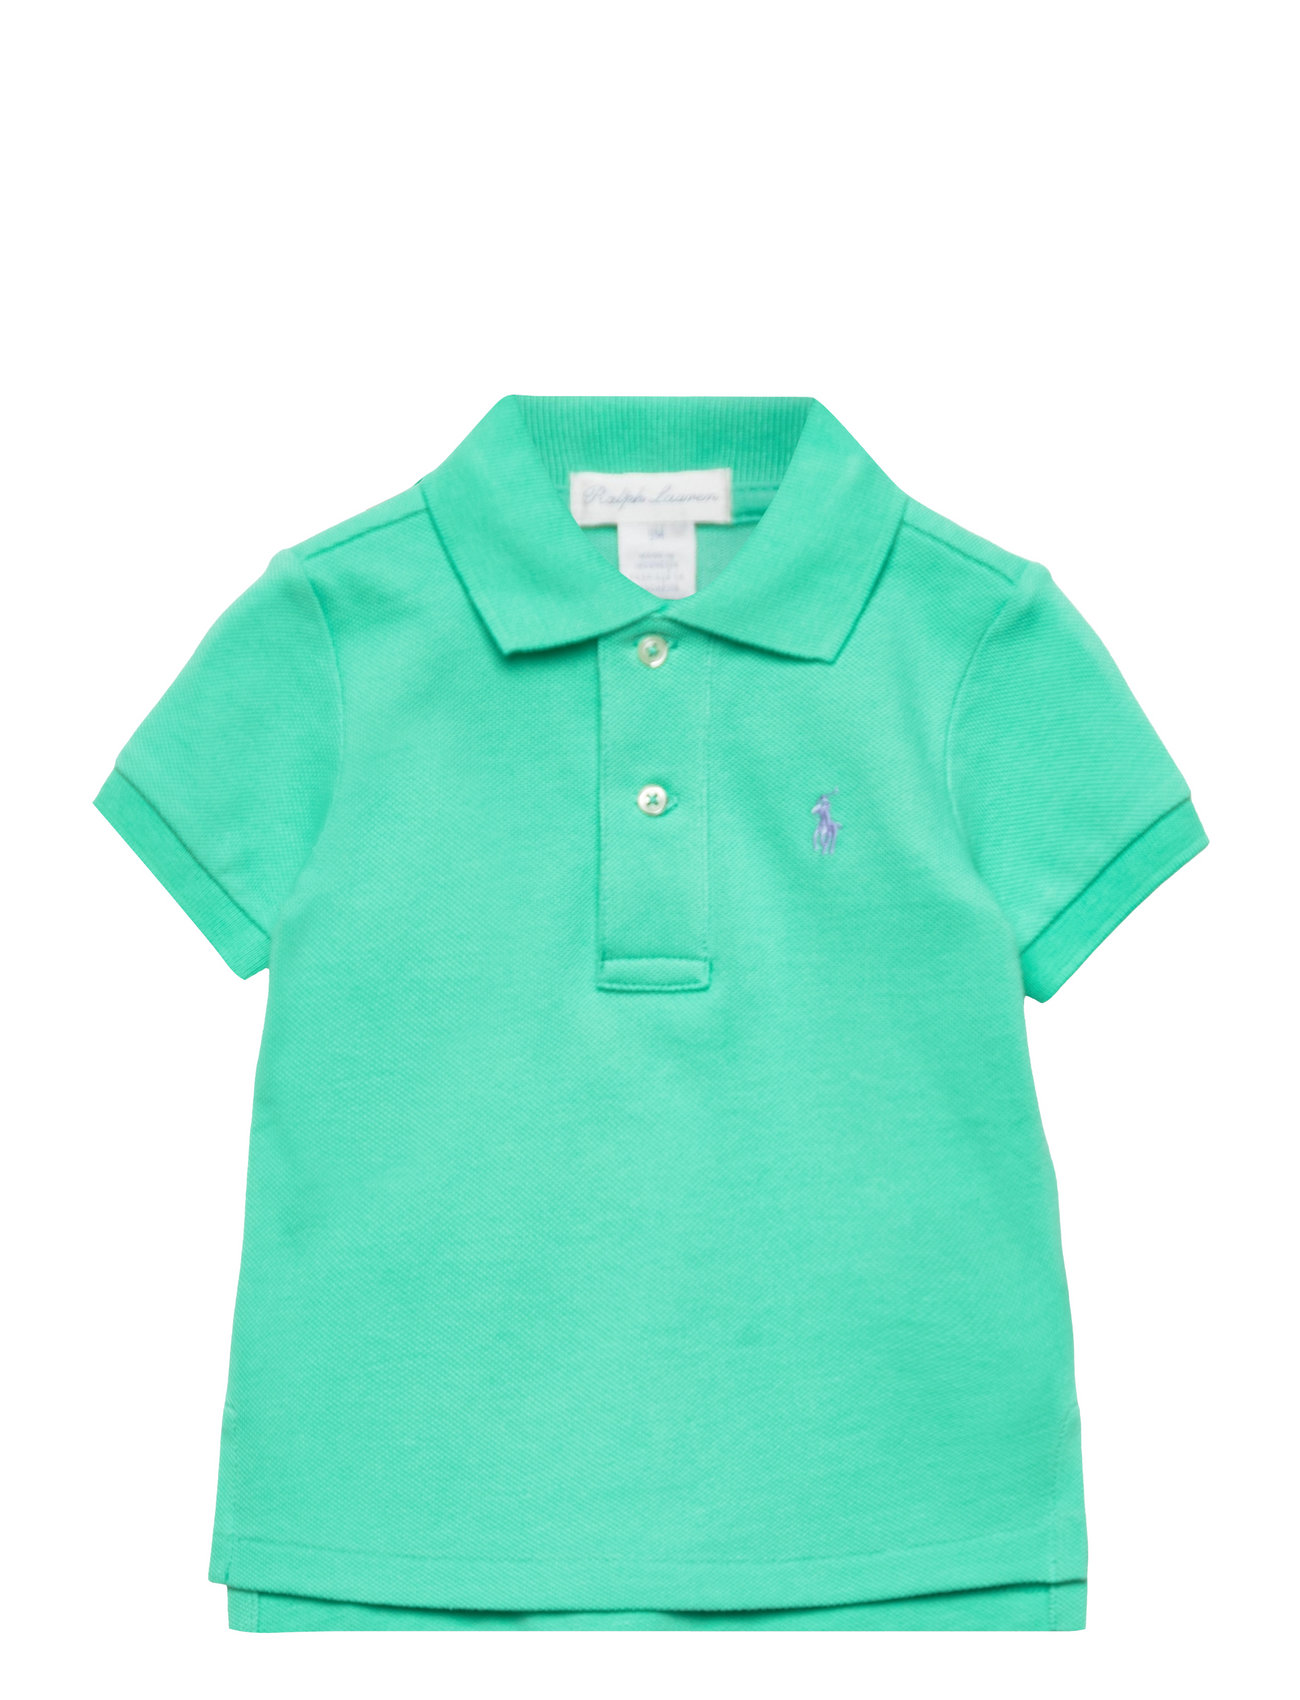 Cotton Mesh Polo Shirt Tops T-shirts Polo Shirts Short-sleeved Polo Shirts Green Ralph Lauren Baby